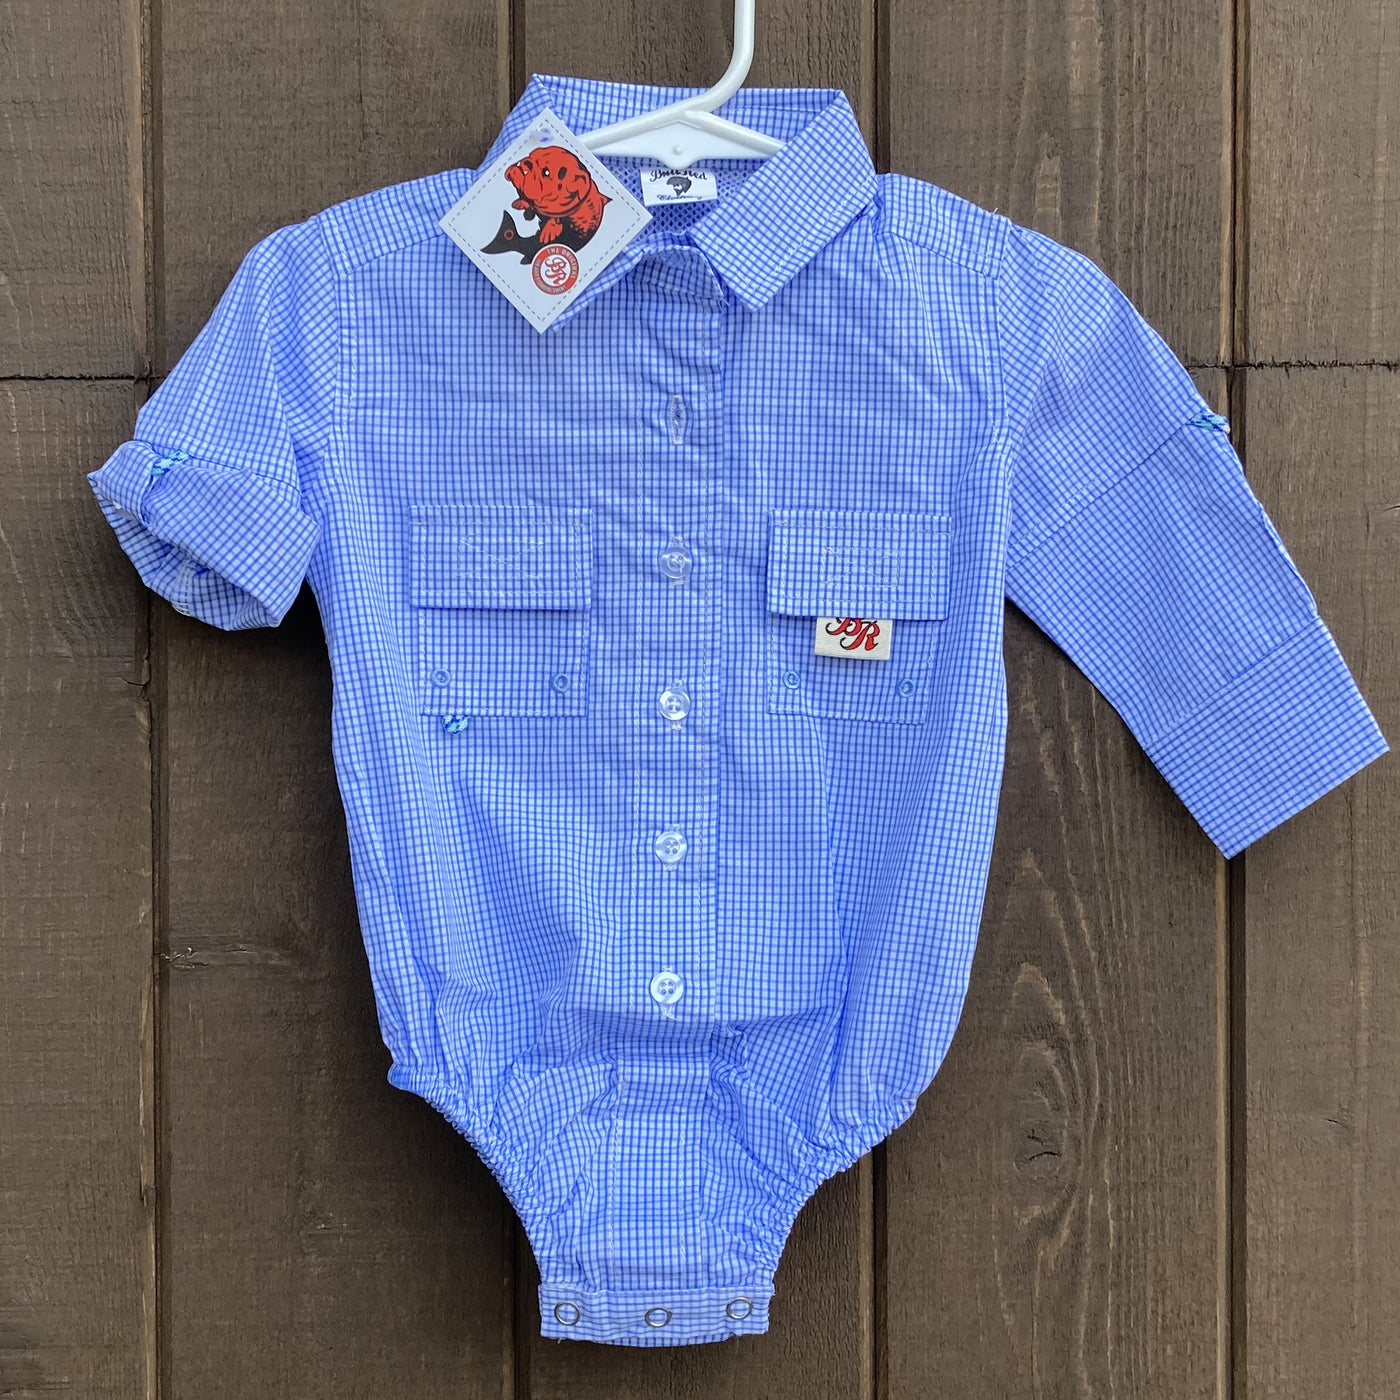 BullRed Clothing The Original Infant Fishing Shirt, Infant Unisex, Size: 12 Months, Red